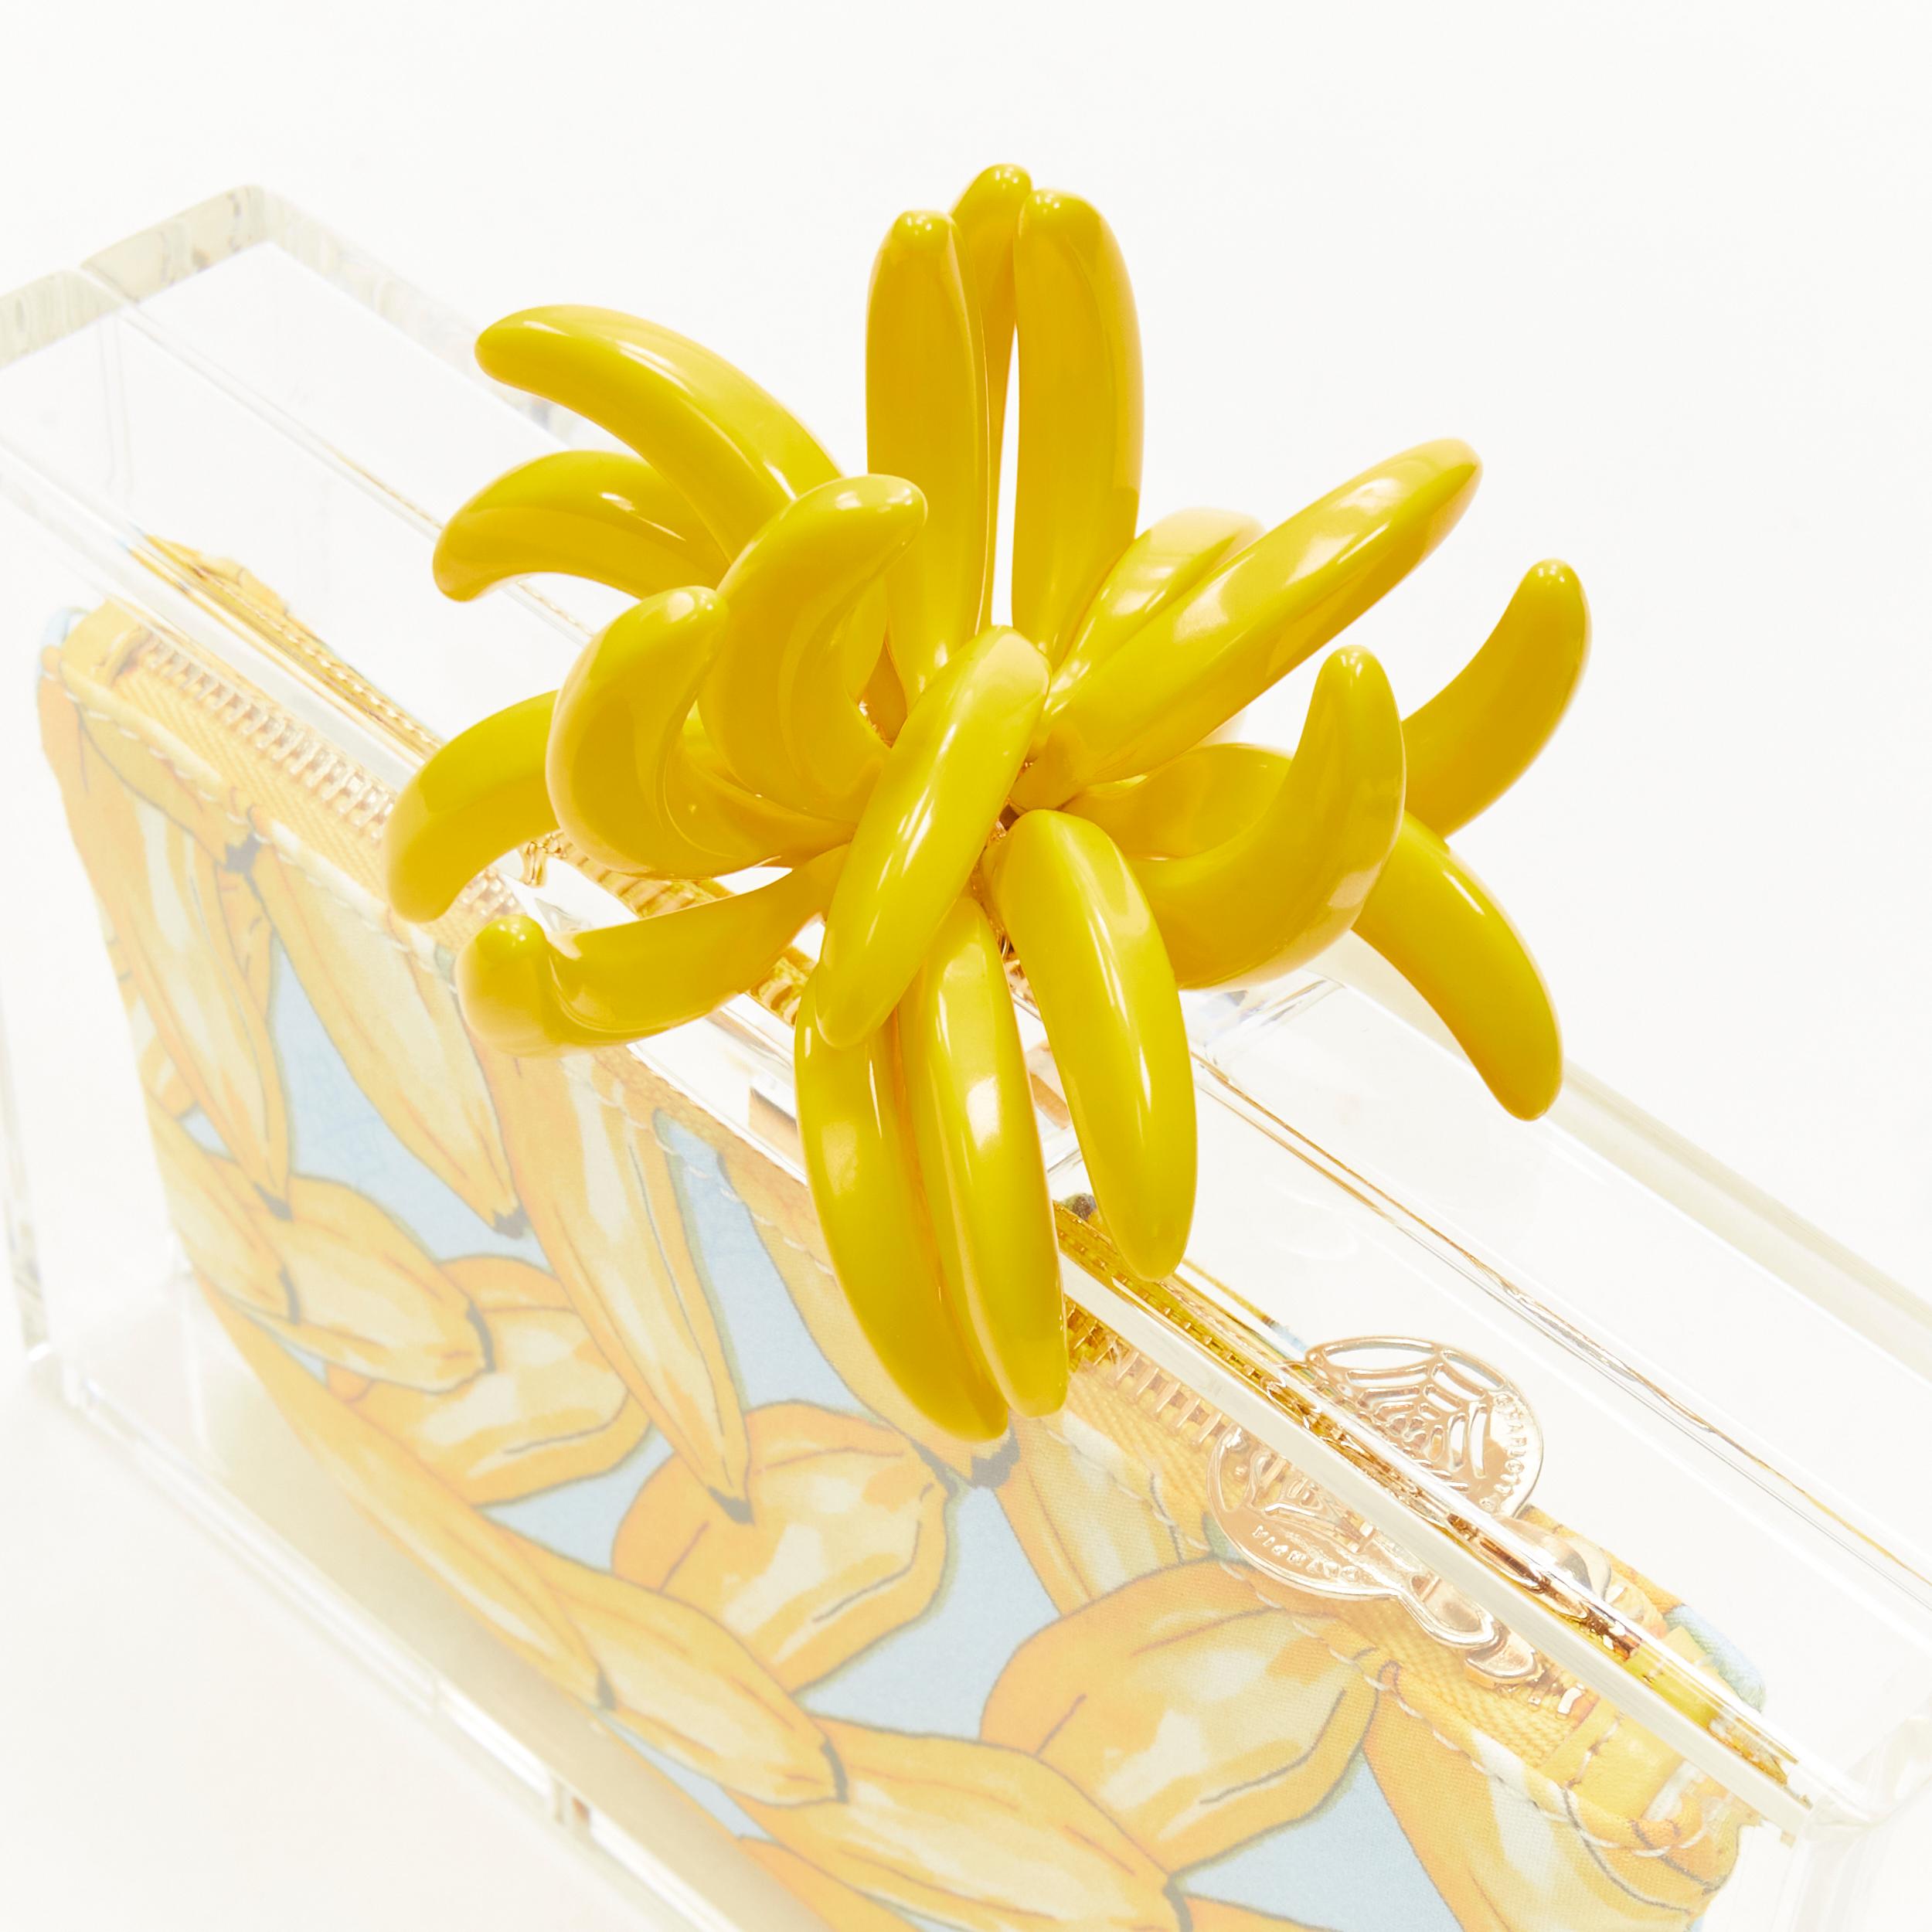 rare CHARLOTTE OLYMPIA yellow Banana charm zip pouch perspex PVC box clutch bag 2